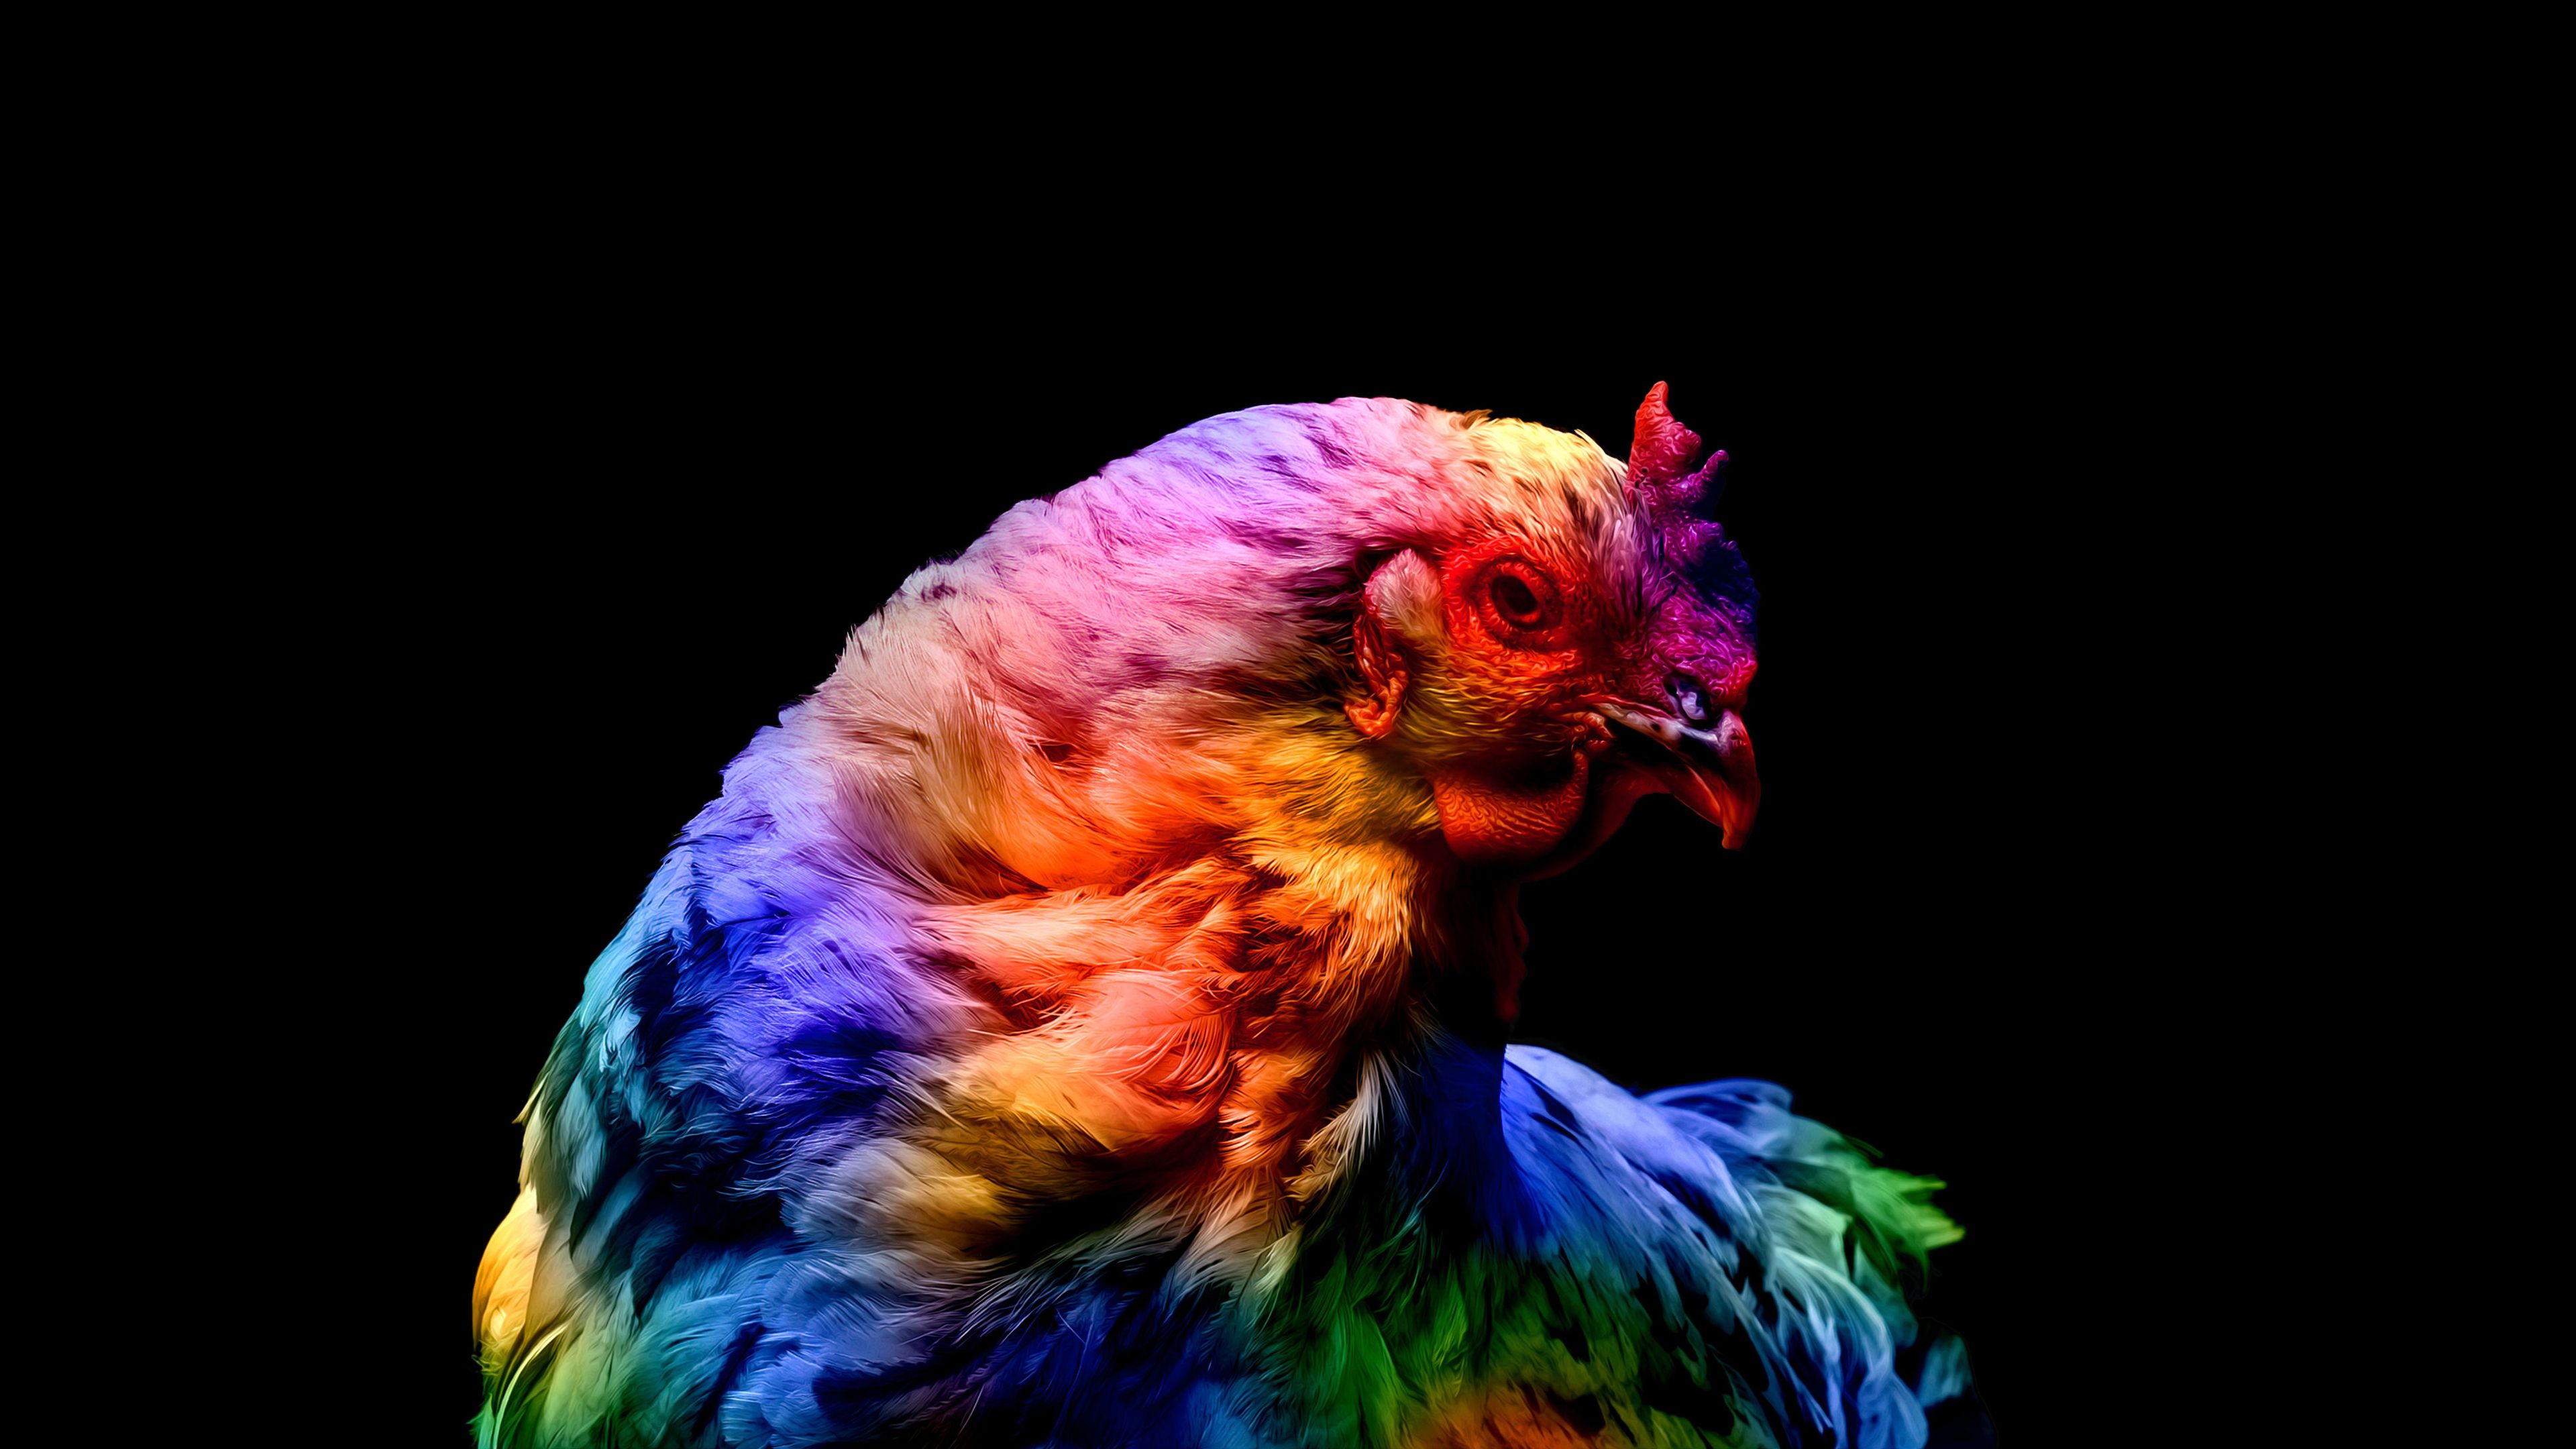 Chicken, Colorful, Black background, AMOLED, 4k Free deskk wallpaper, Ultra HD